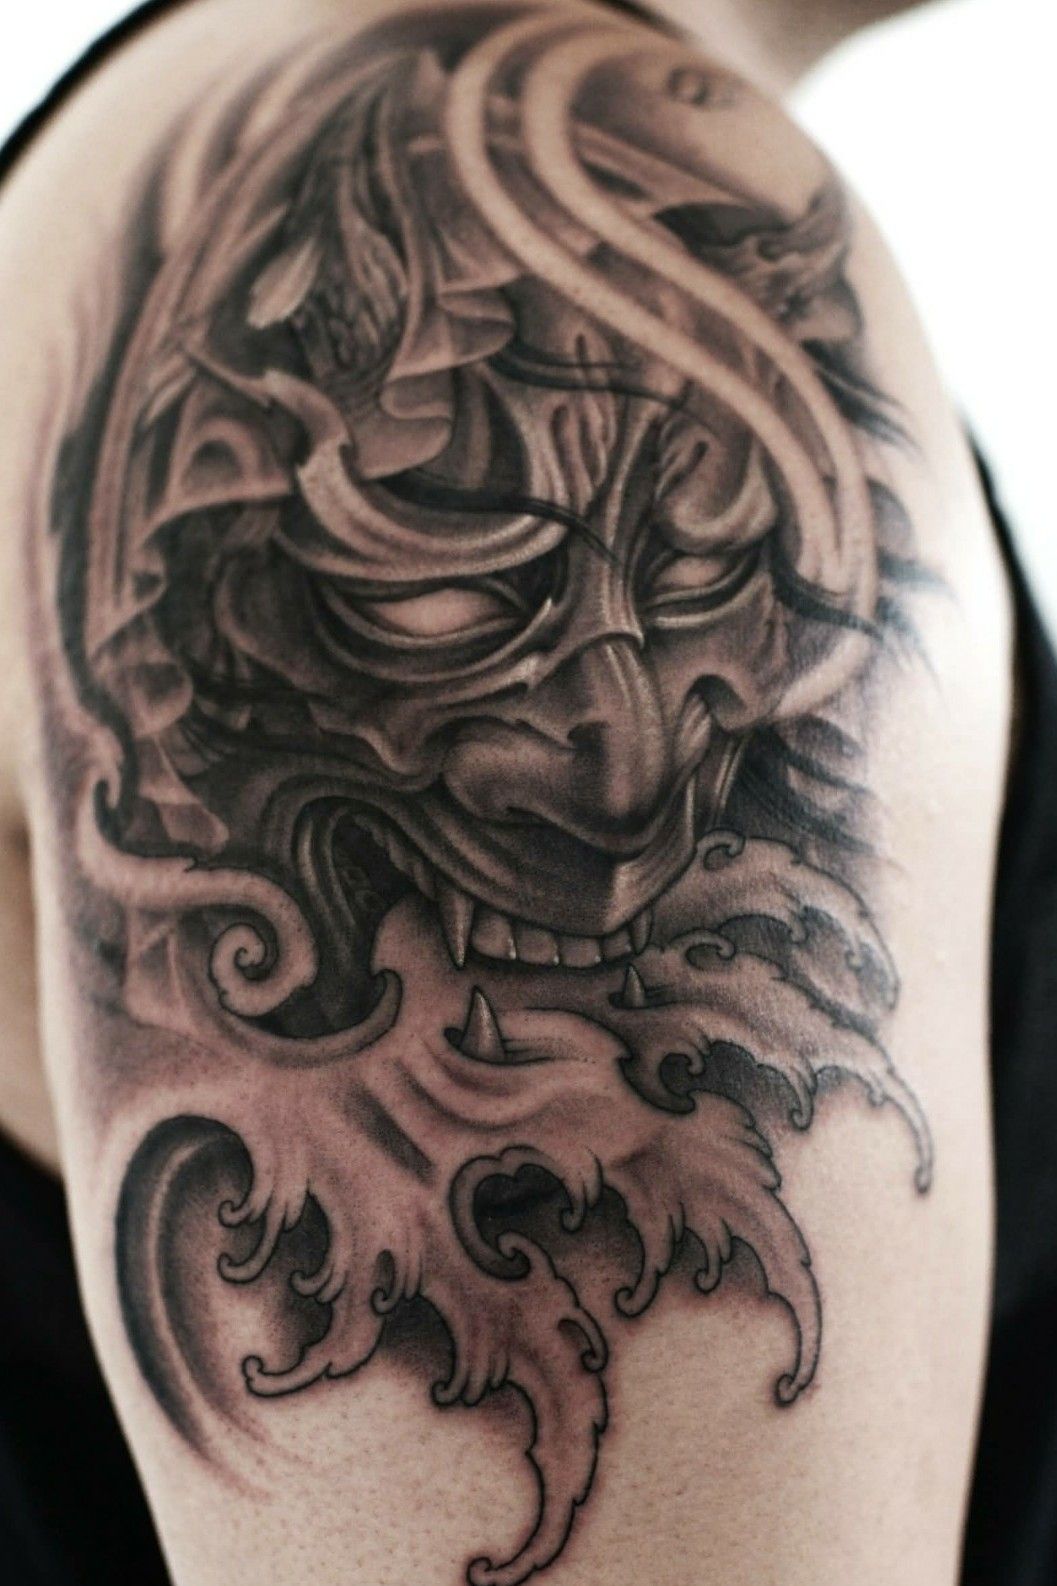 Tattoo uploaded by Joey Beasley • The Batman Who Laughs • Tattoodo